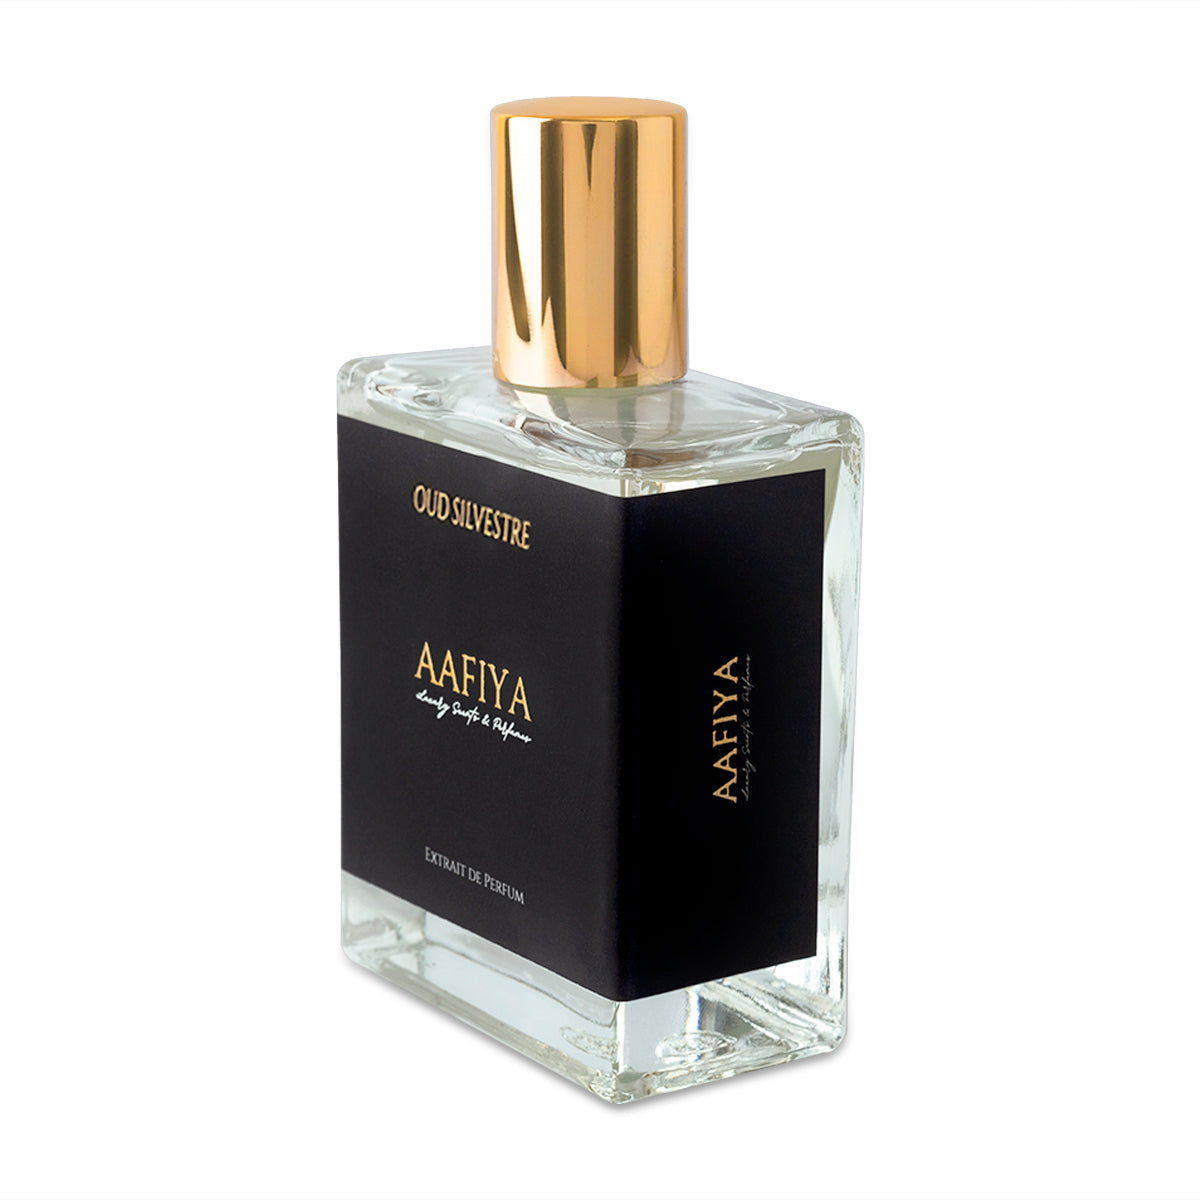 Oud Rose Avon perfume - a new fragrance for women 2022